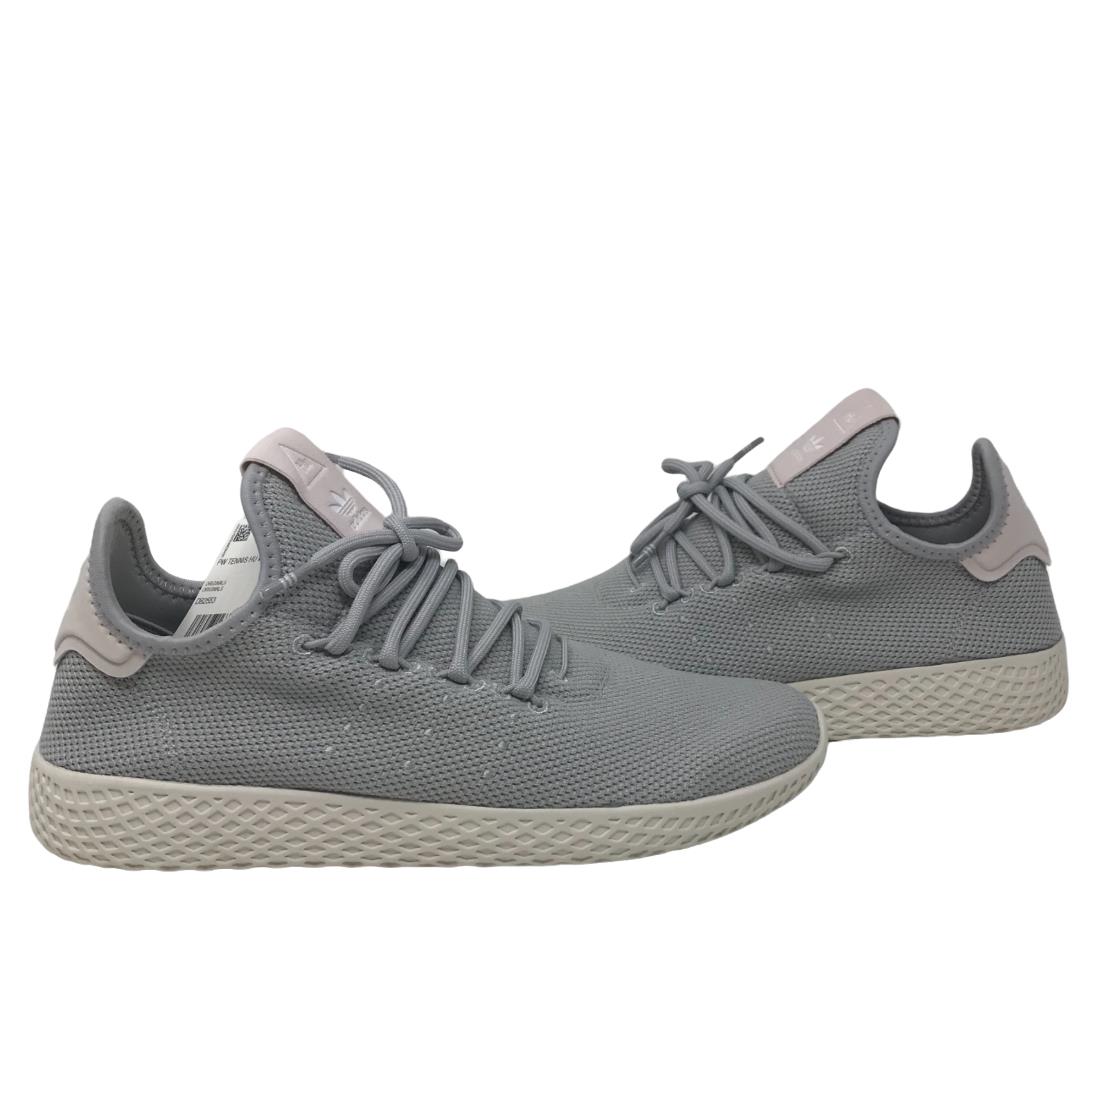 Adidas shoes  - Carbon/Chalk White 0